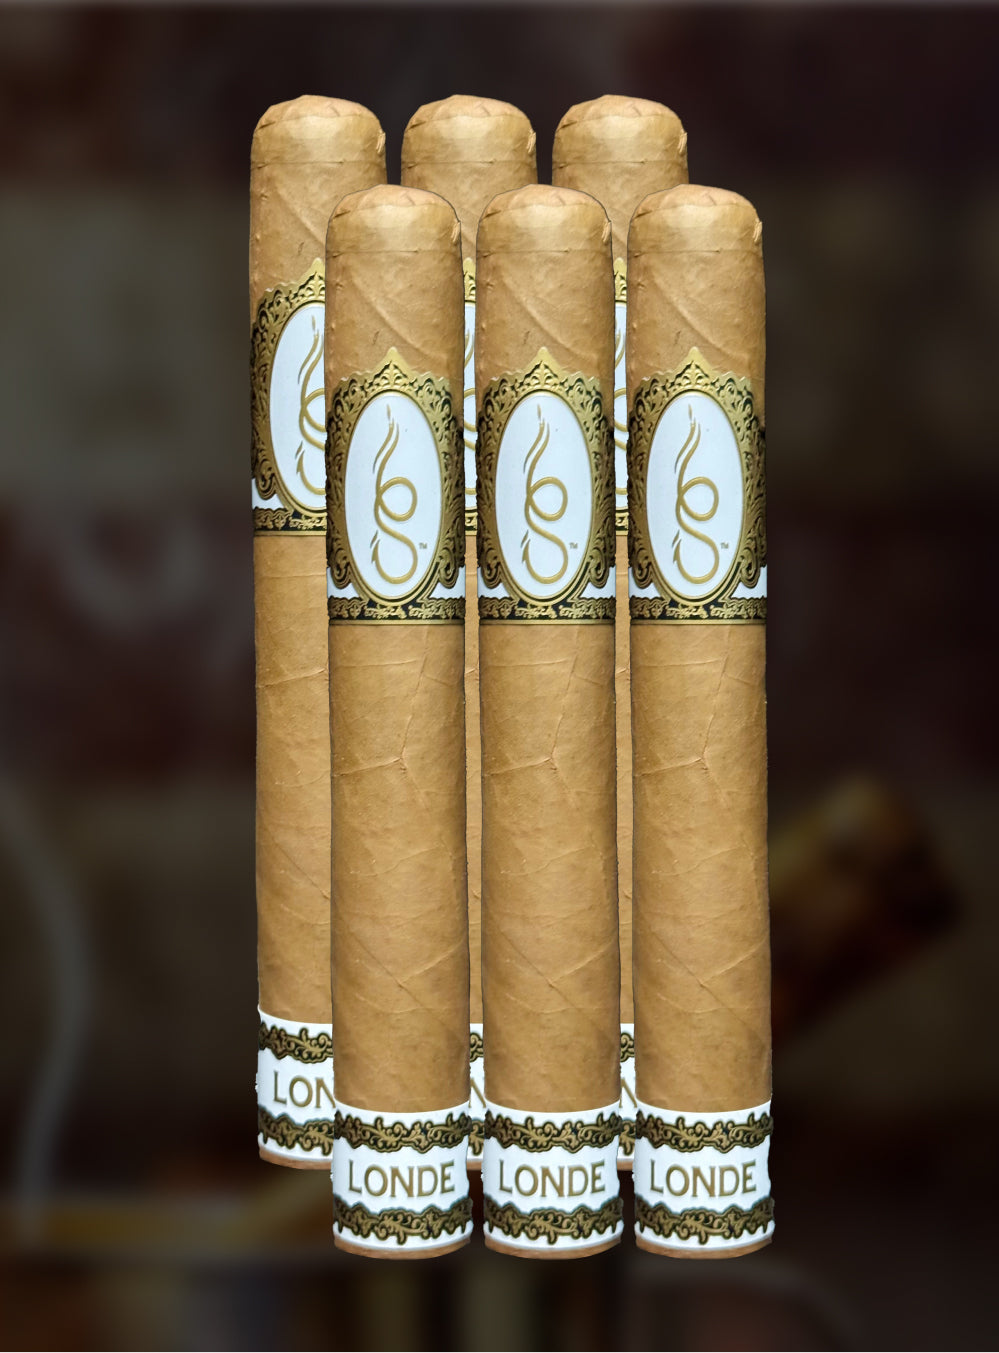 6S™ LONDE Toro 3pk Premium Cigar 6" x 52